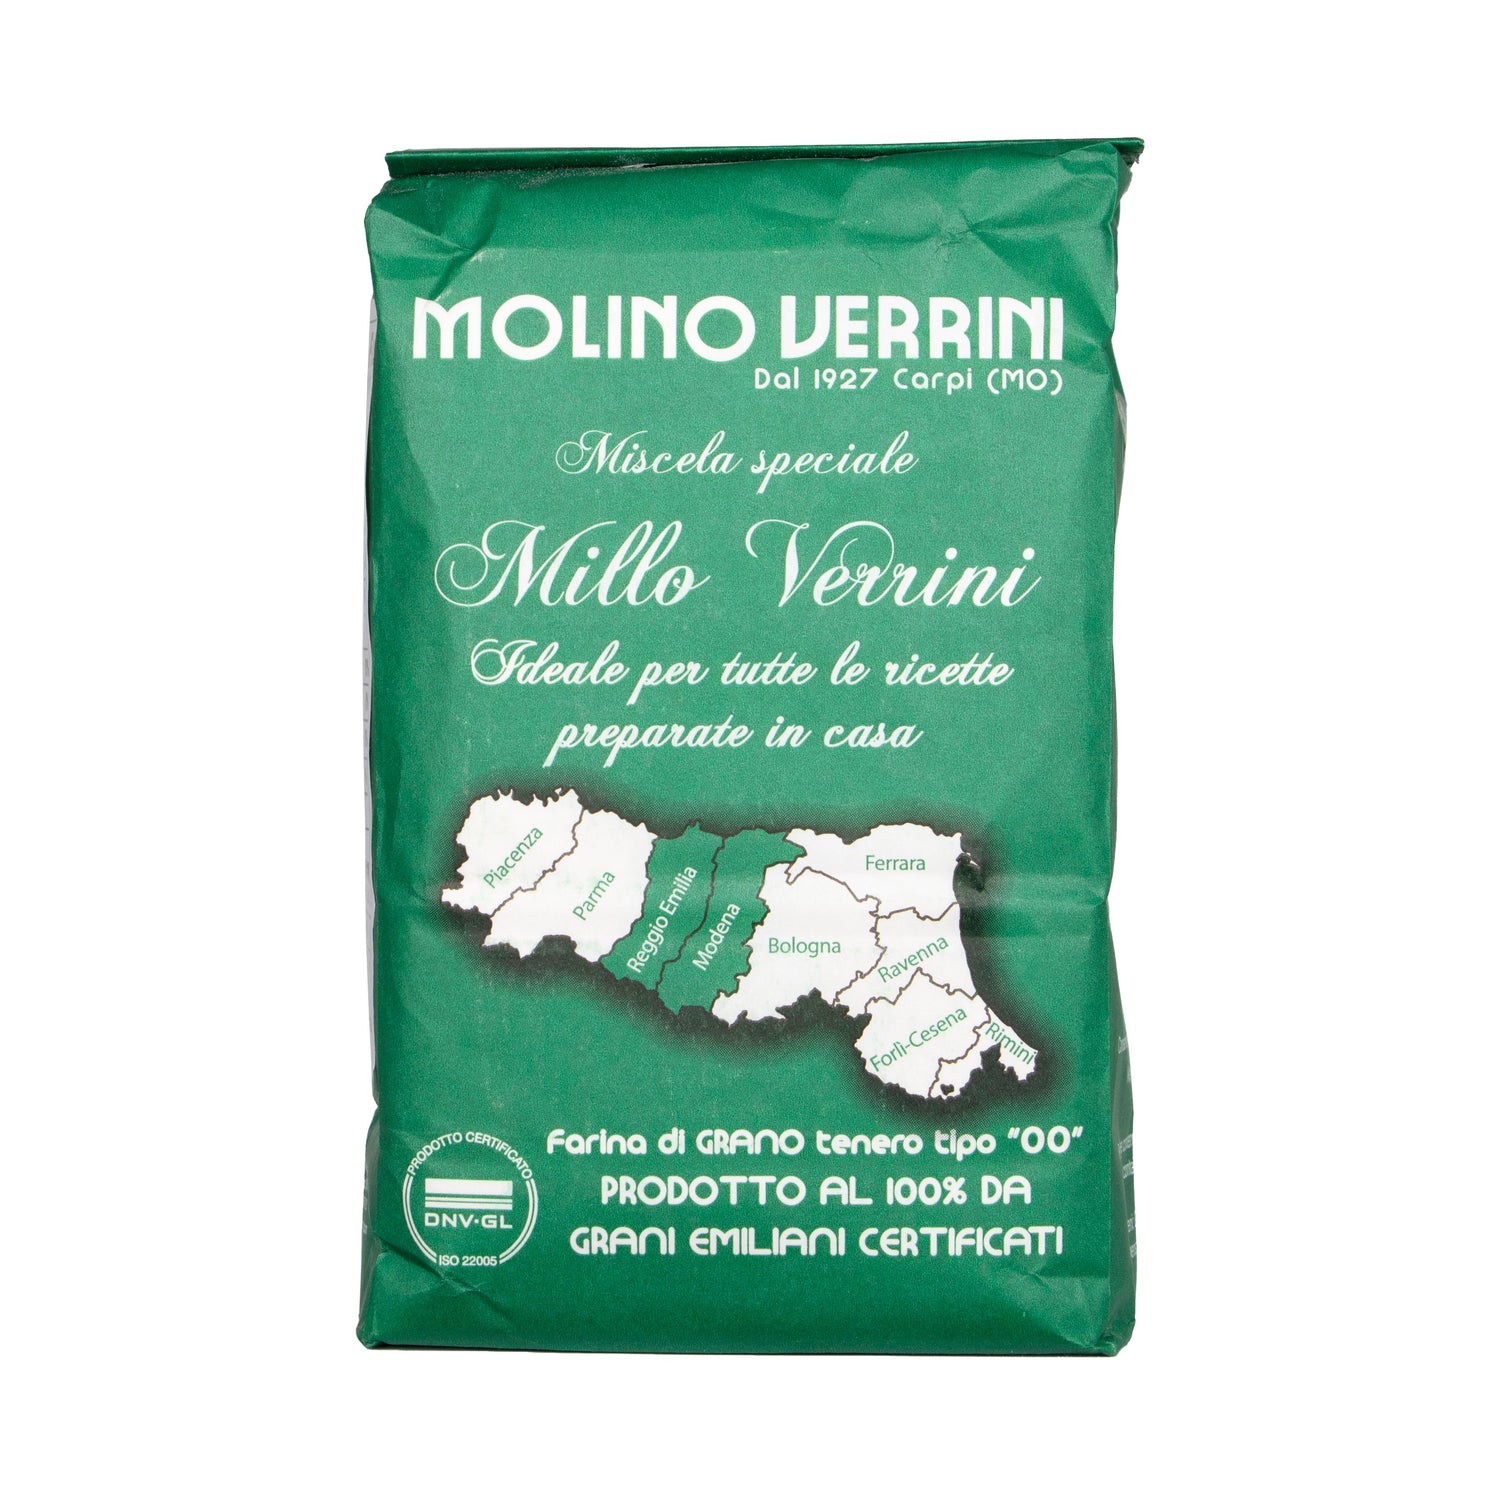 Molino Verrini 100% Italian Wheat Flour Type "00"